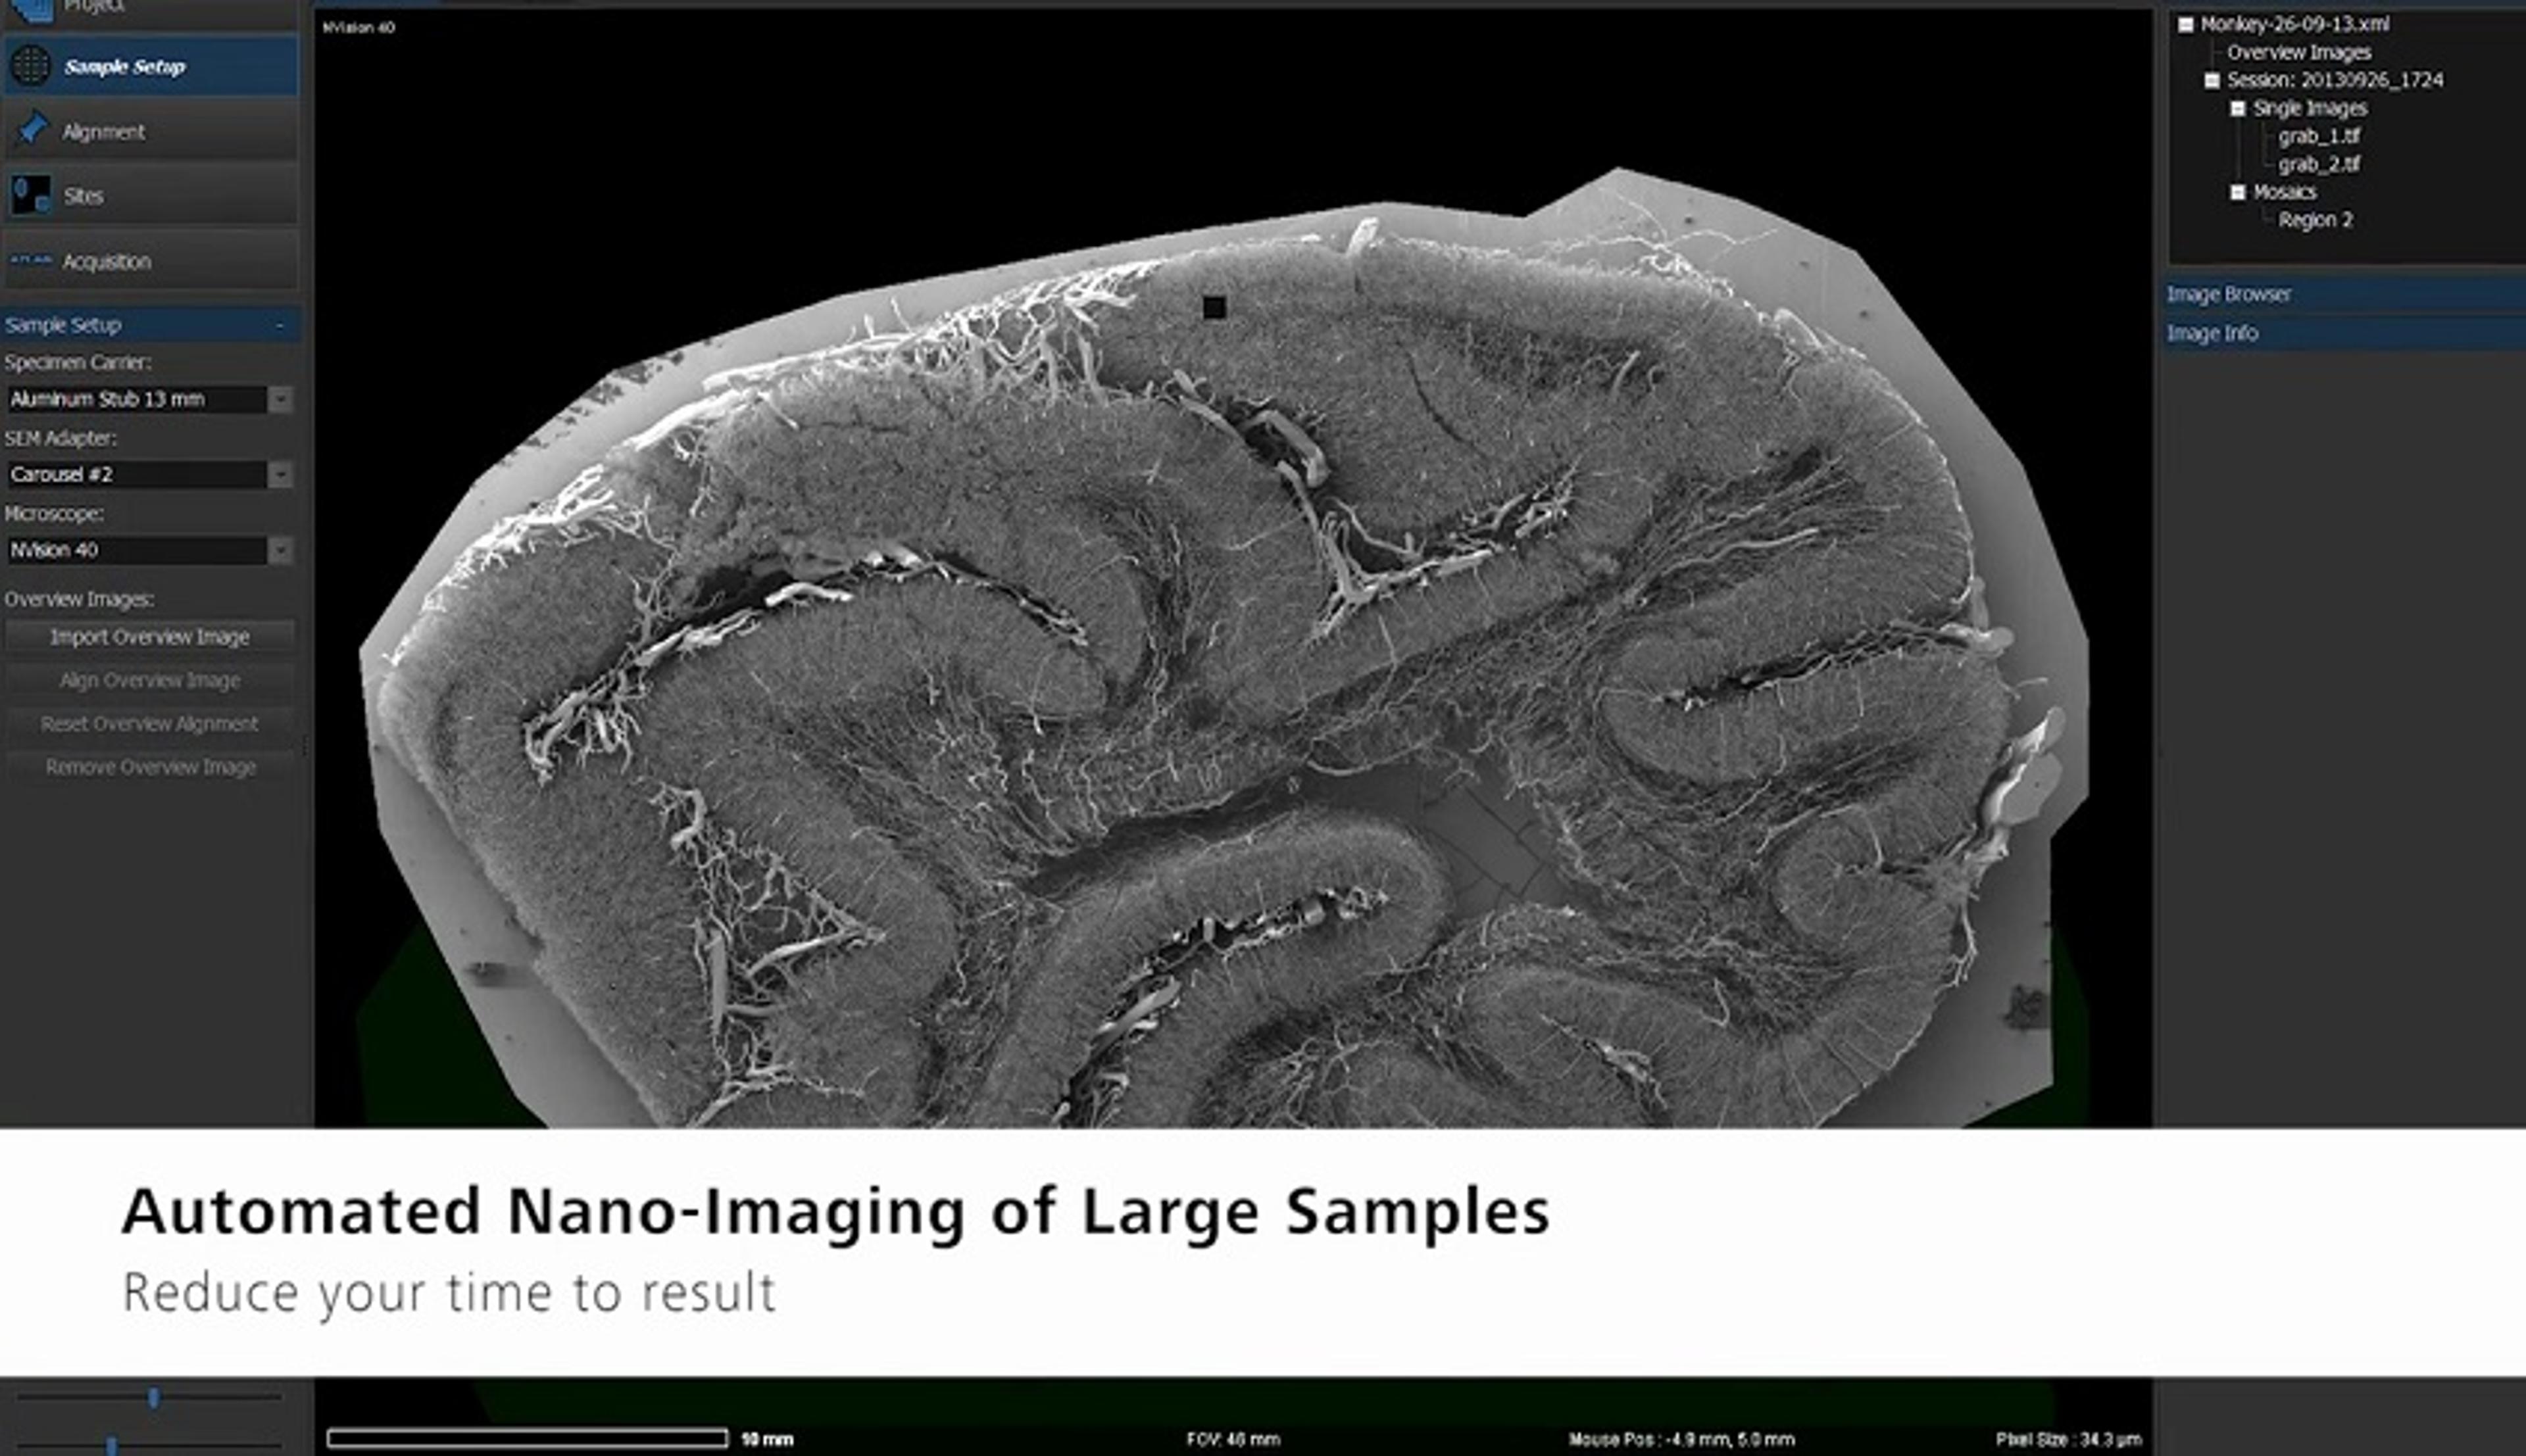 ZEISS Atlas 5 Array Tomography and Correlative Microscopy